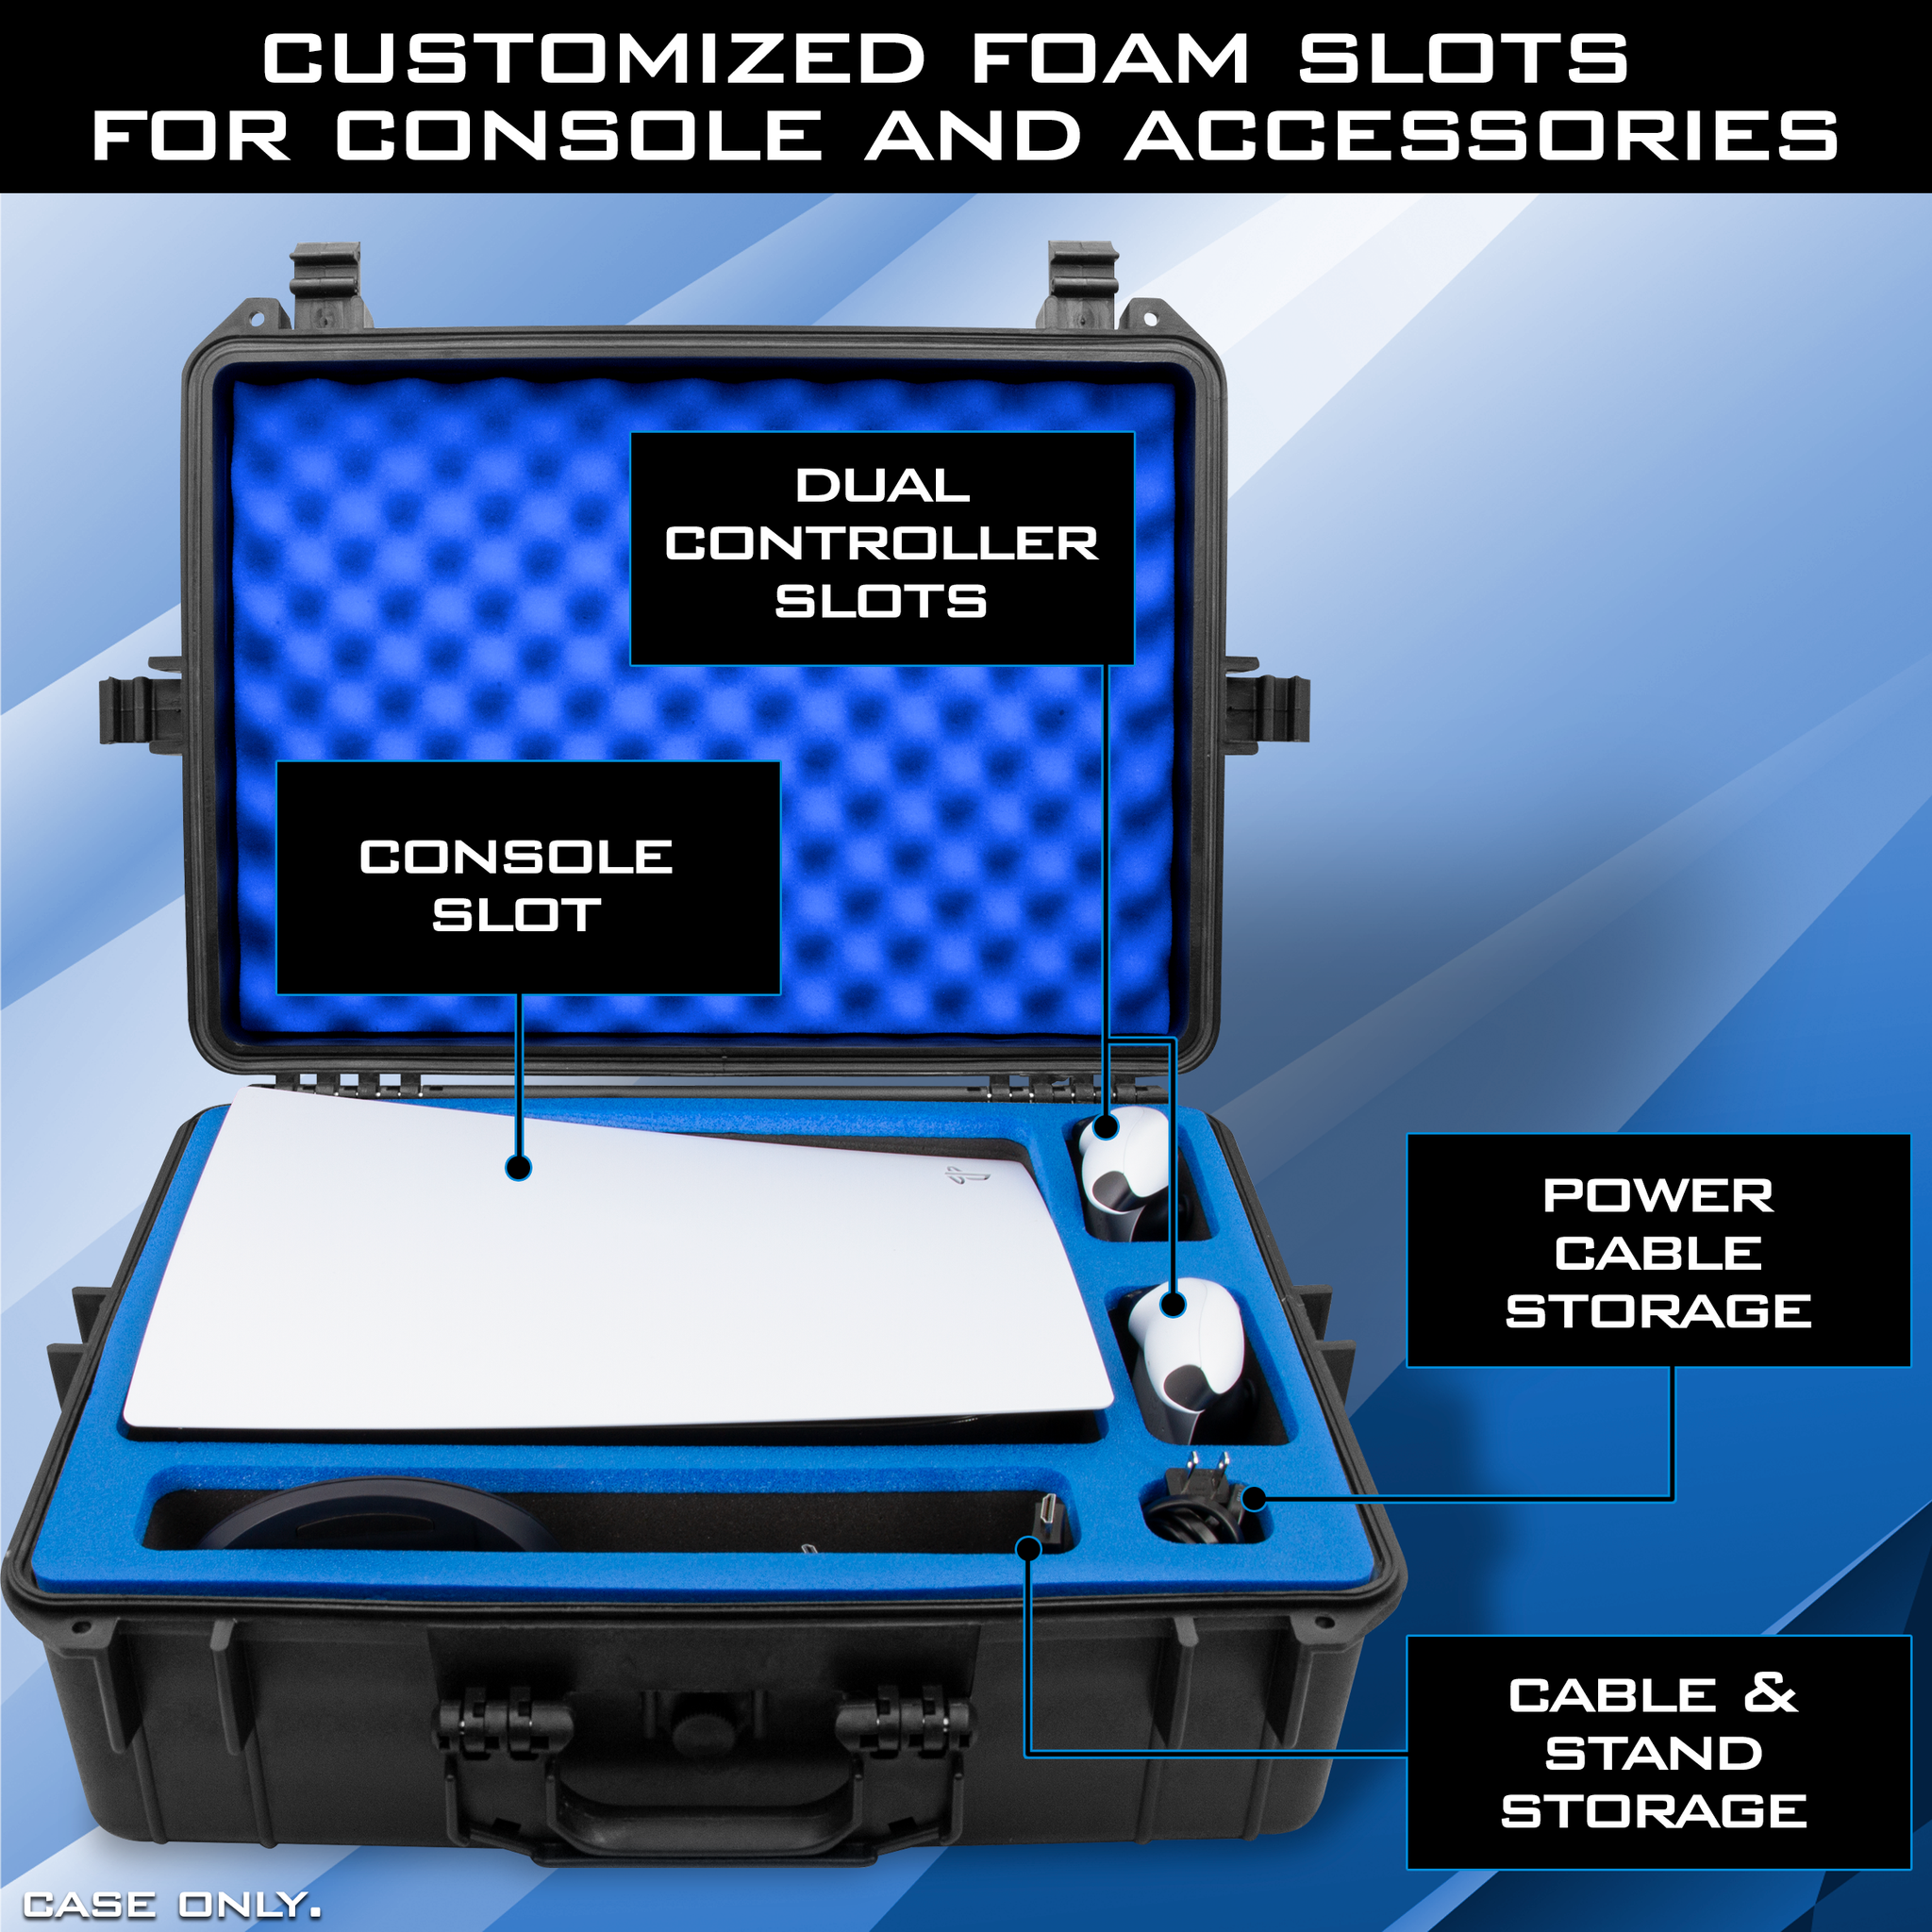 PlayStation 5 Slim Carry Case - Case Club